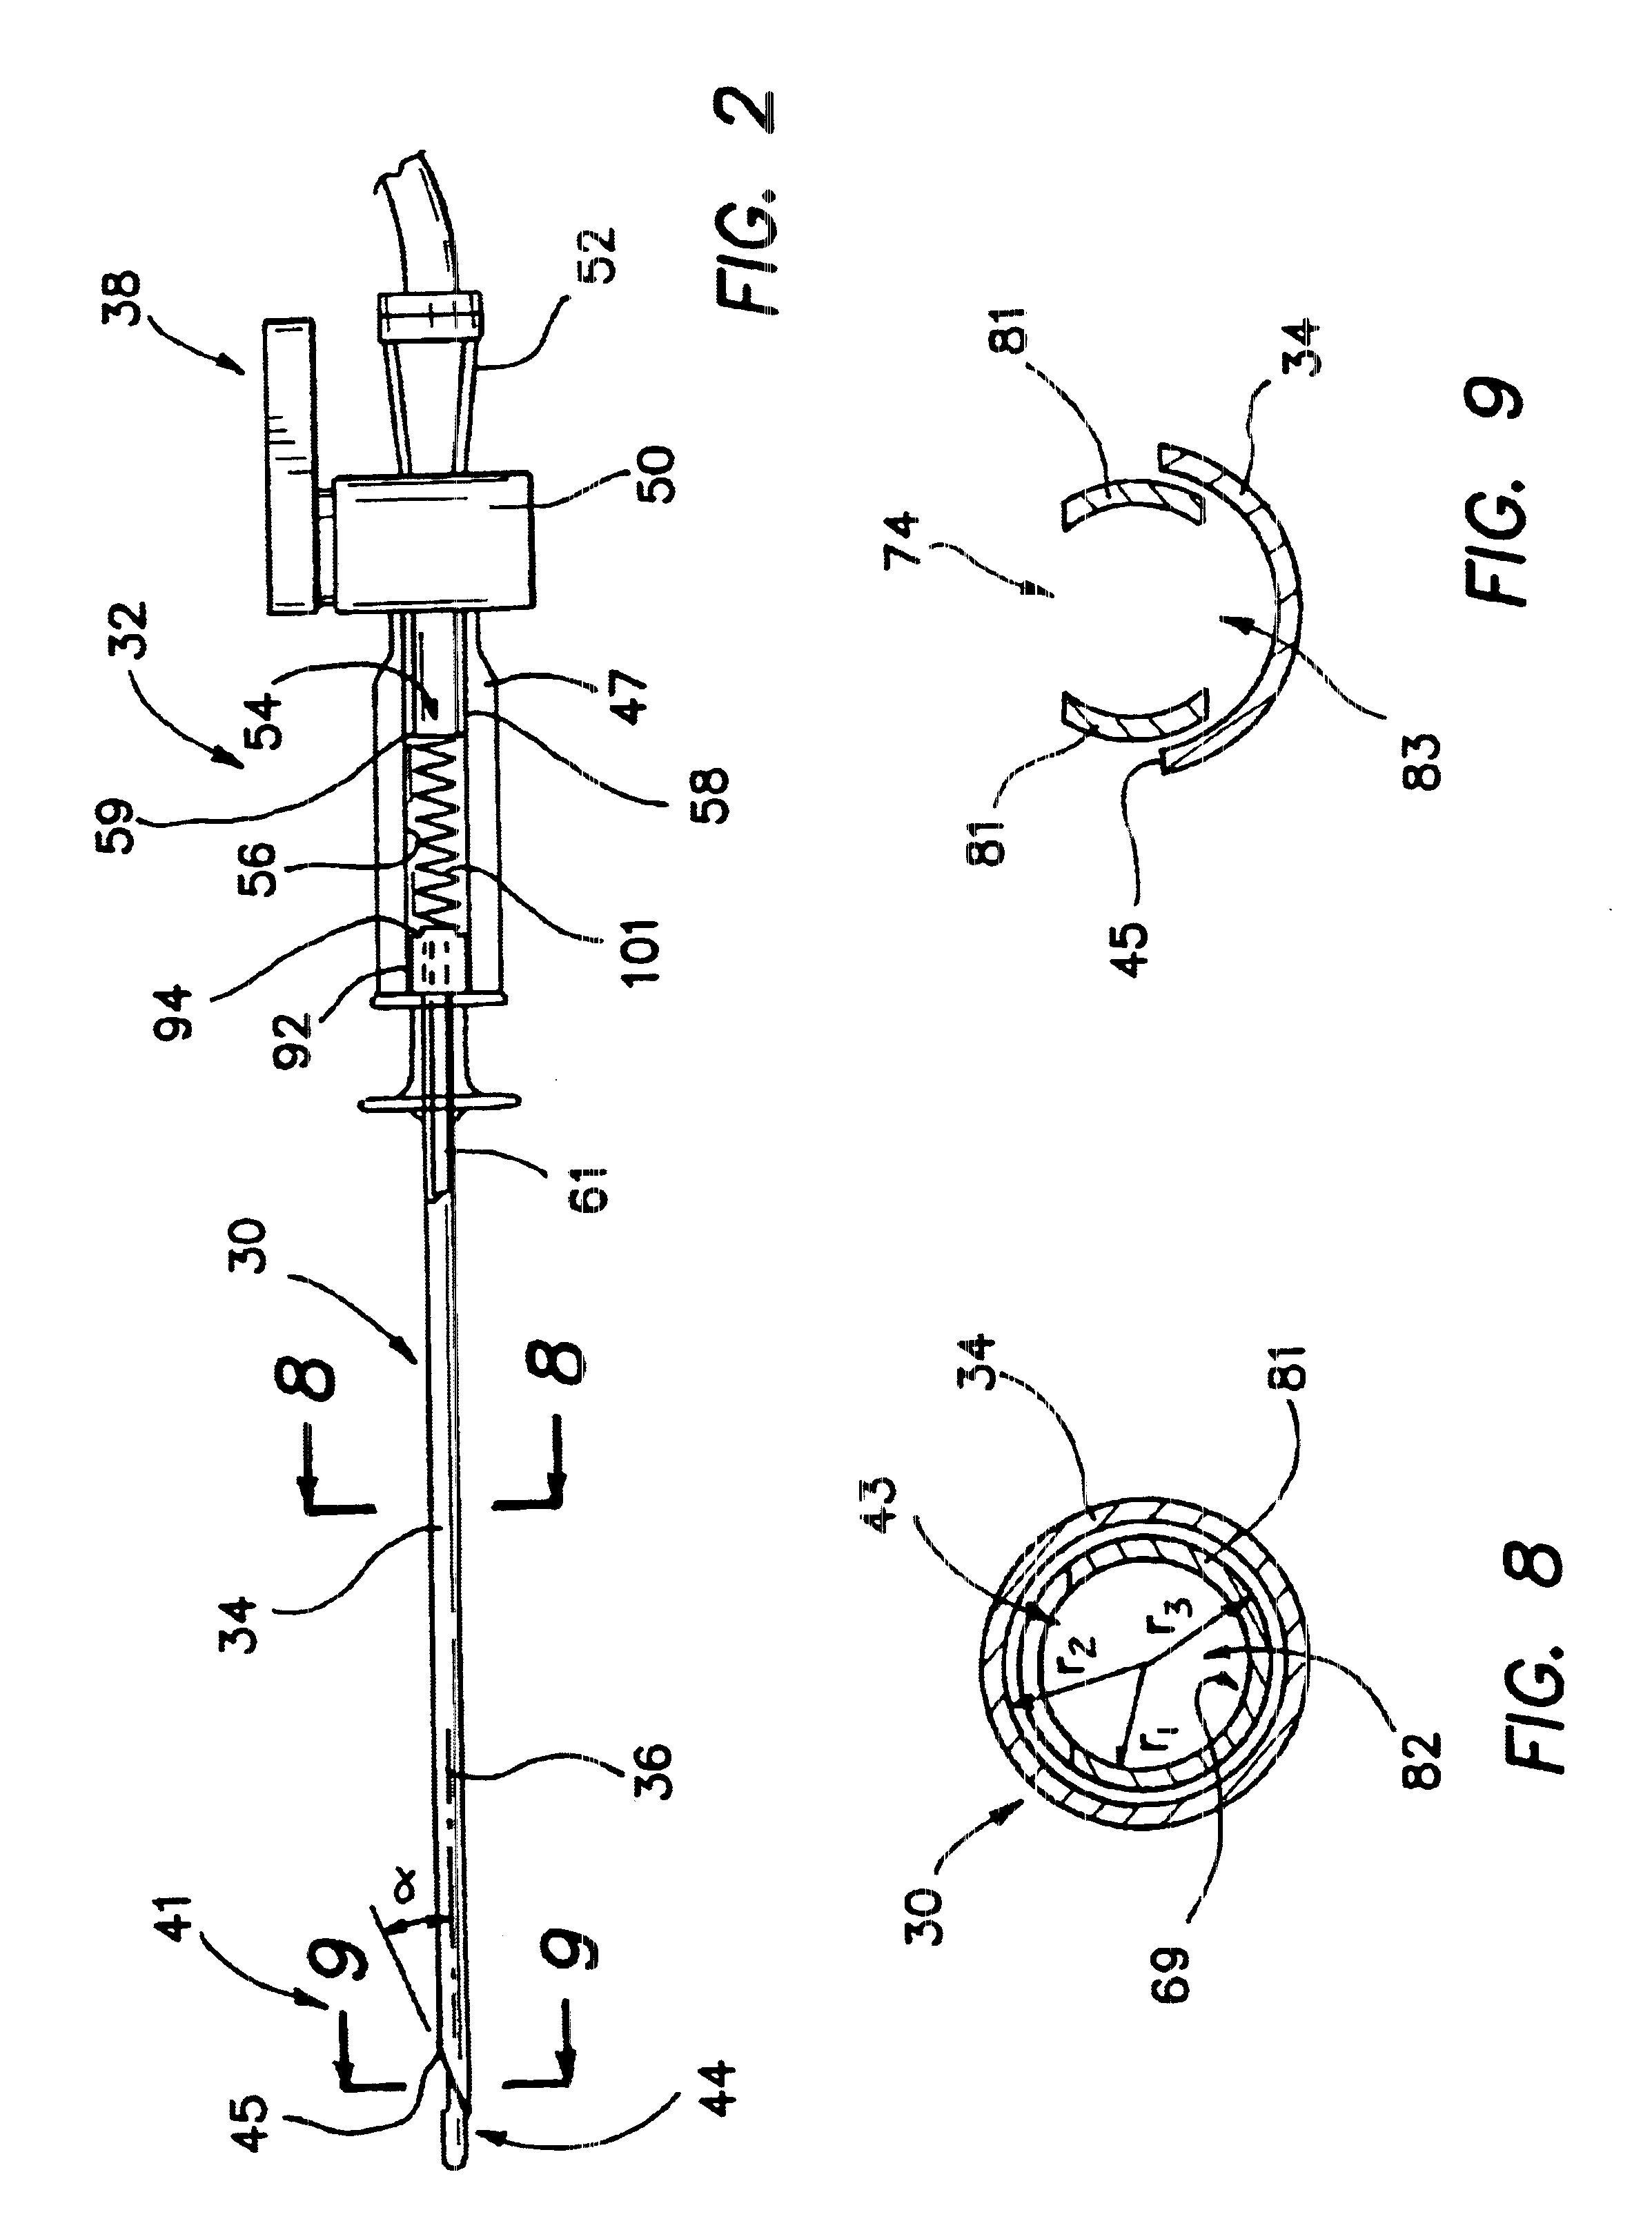 Insufflation needle apparatus